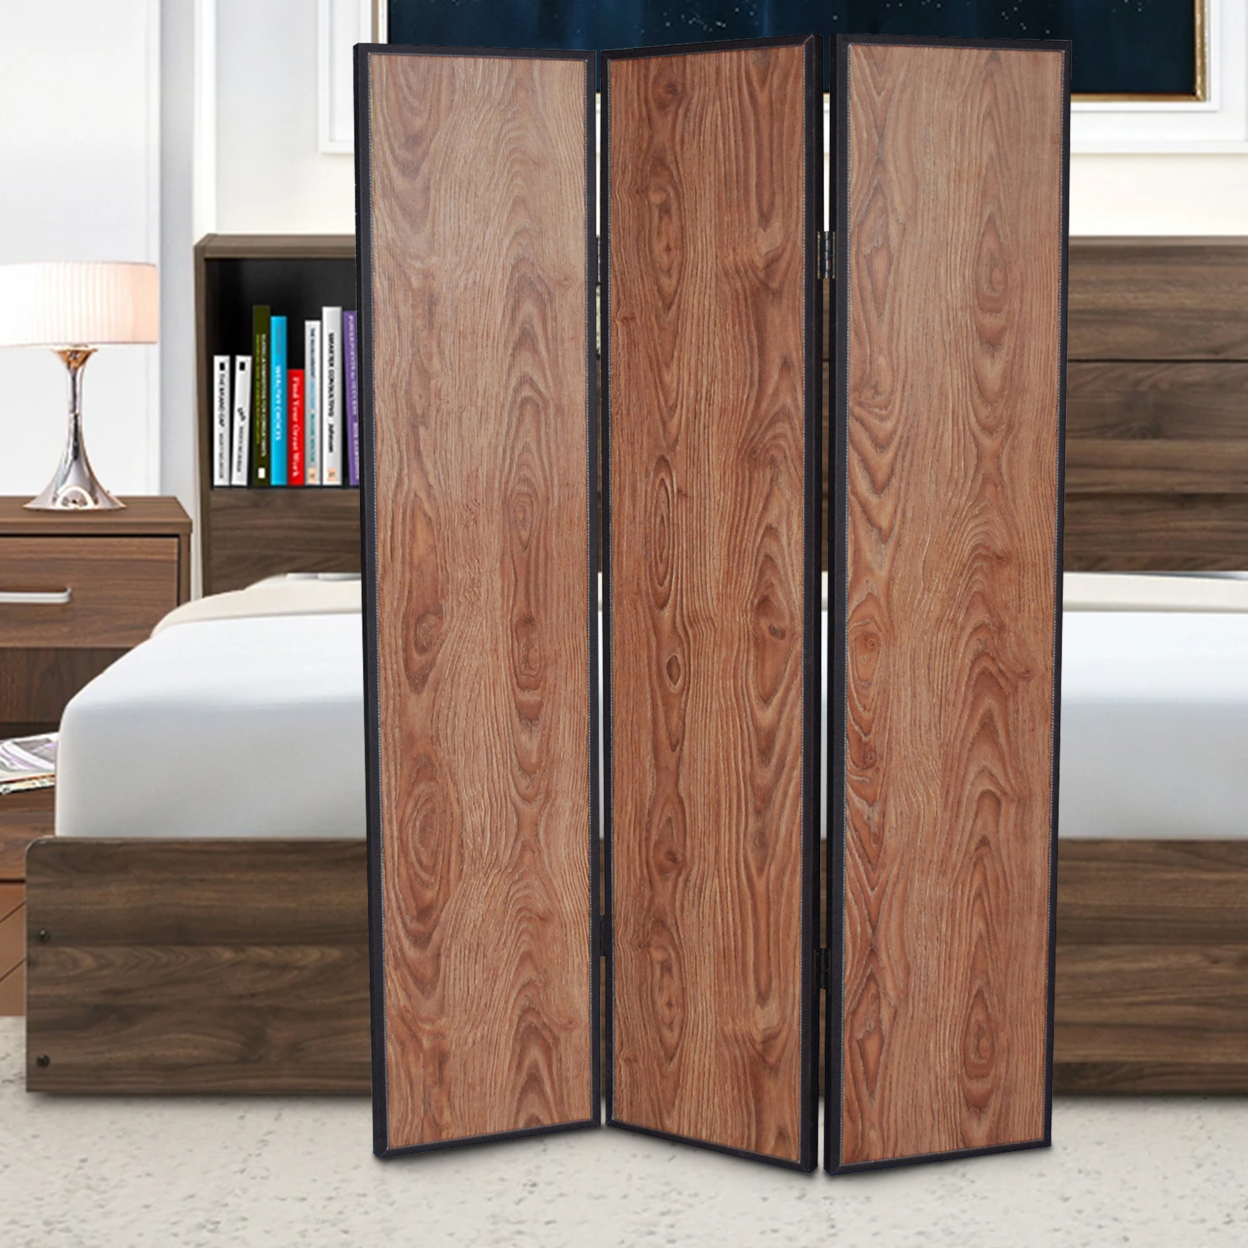 3 Panel Foldable Wooden Screen With Grain Details, Brown- Saltoro Sherpi